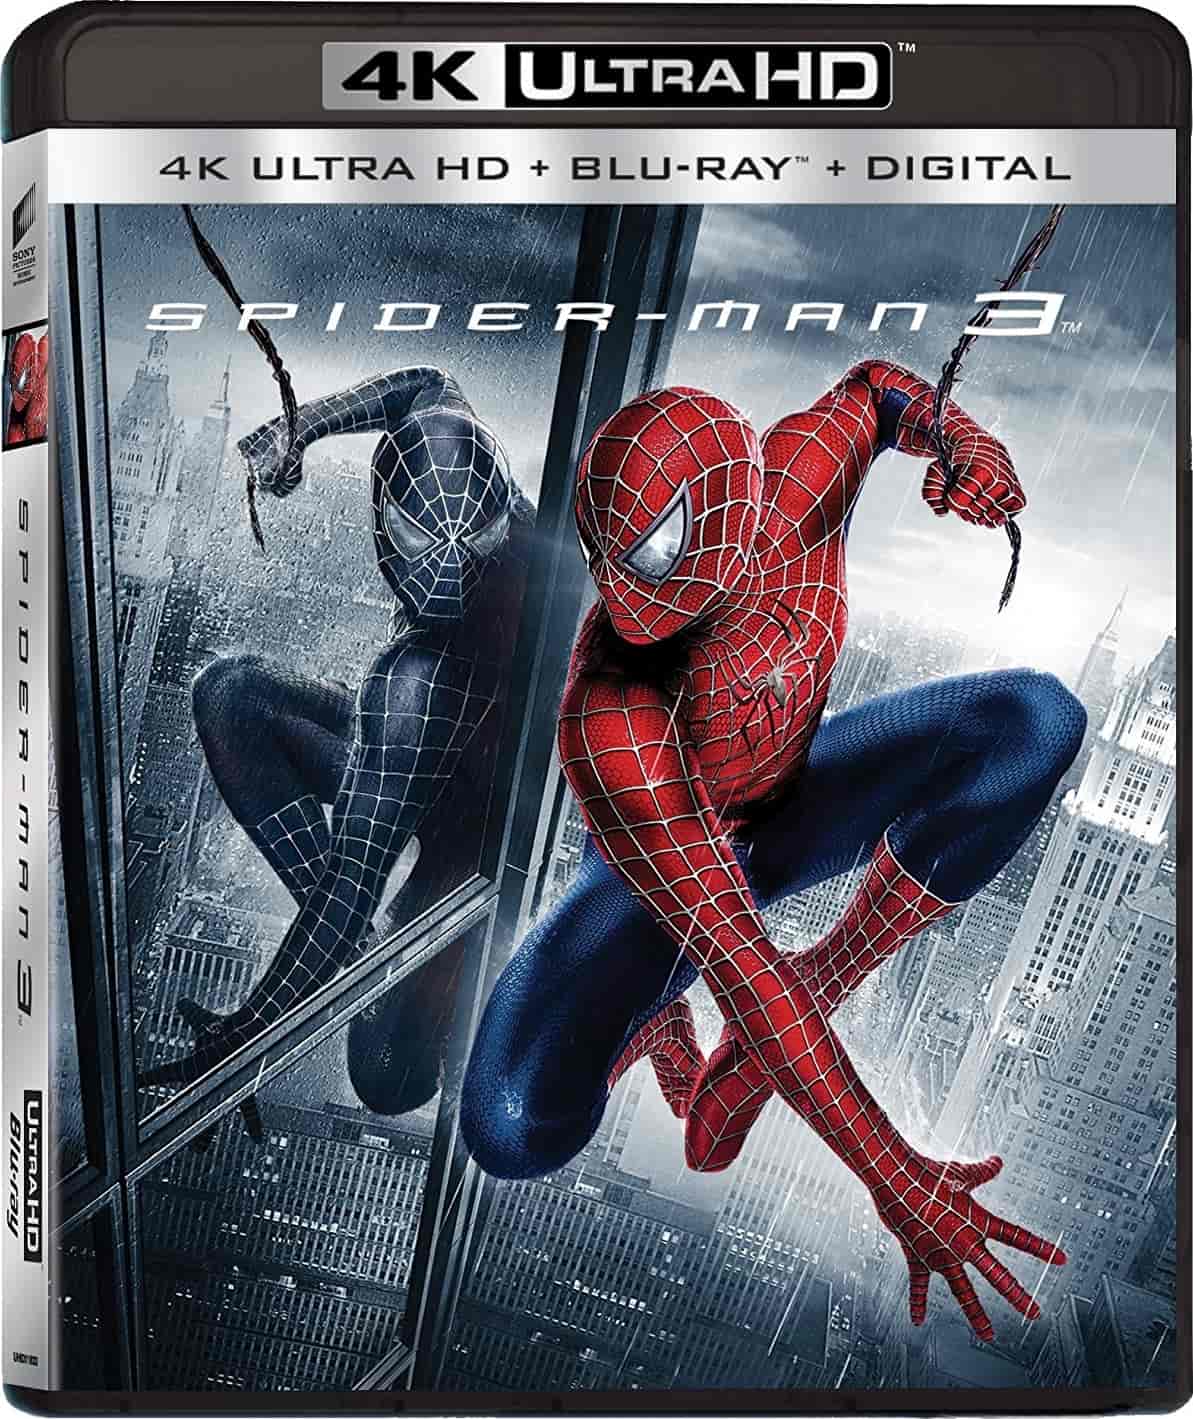 Stiahni si UHD Filmy Spider-Man 3 (2007)(CZ/SK/EN)[2160p] = CSFD 62%